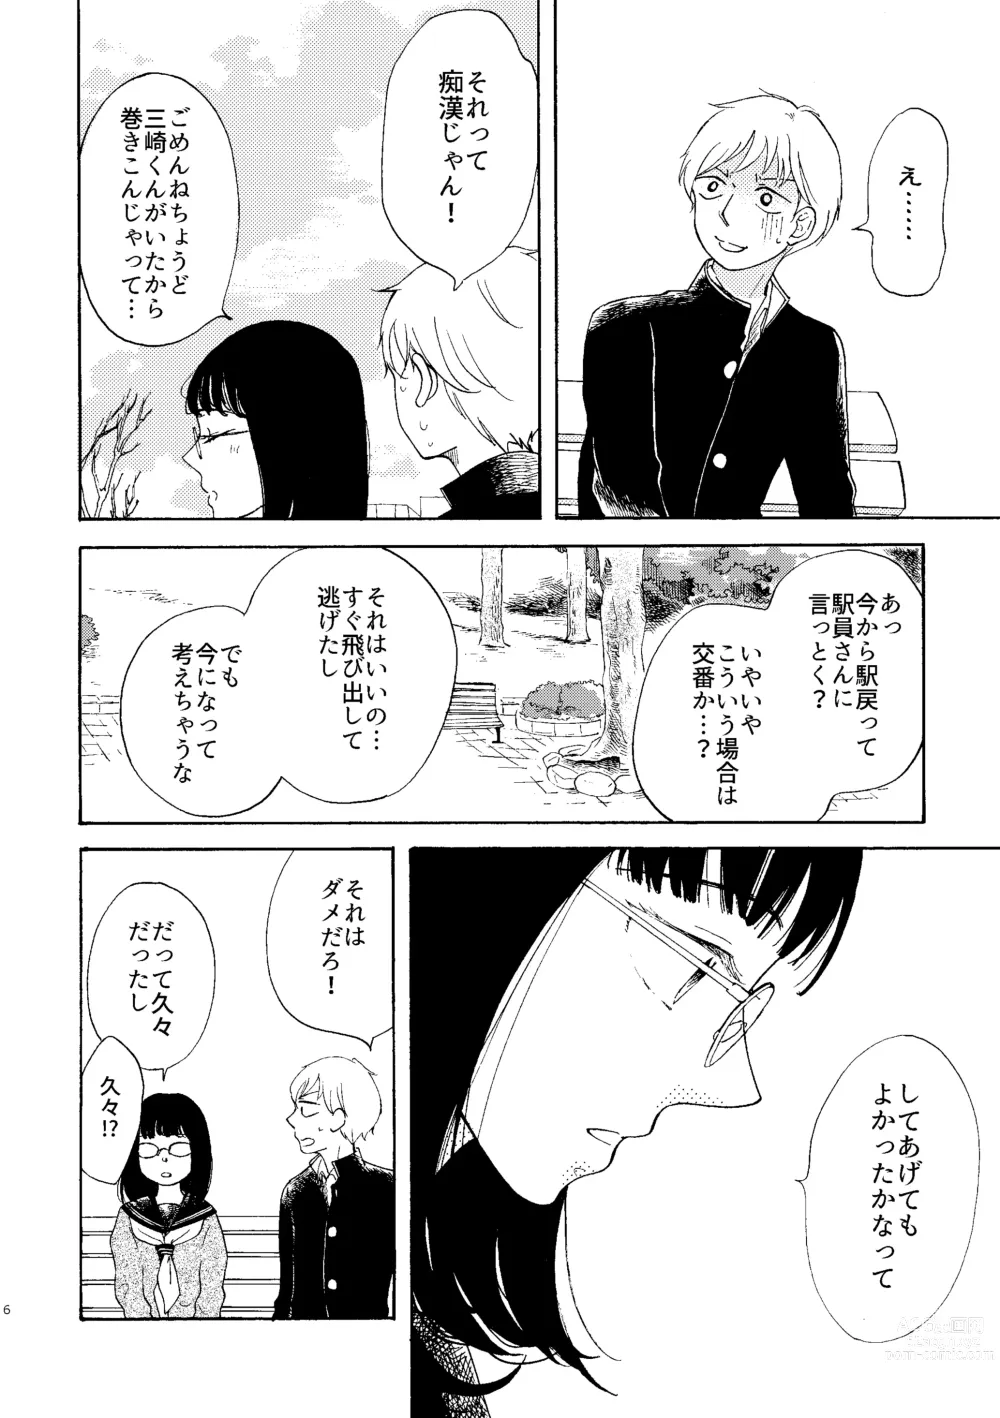 Page 6 of doujinshi Ibitsu na Junjou